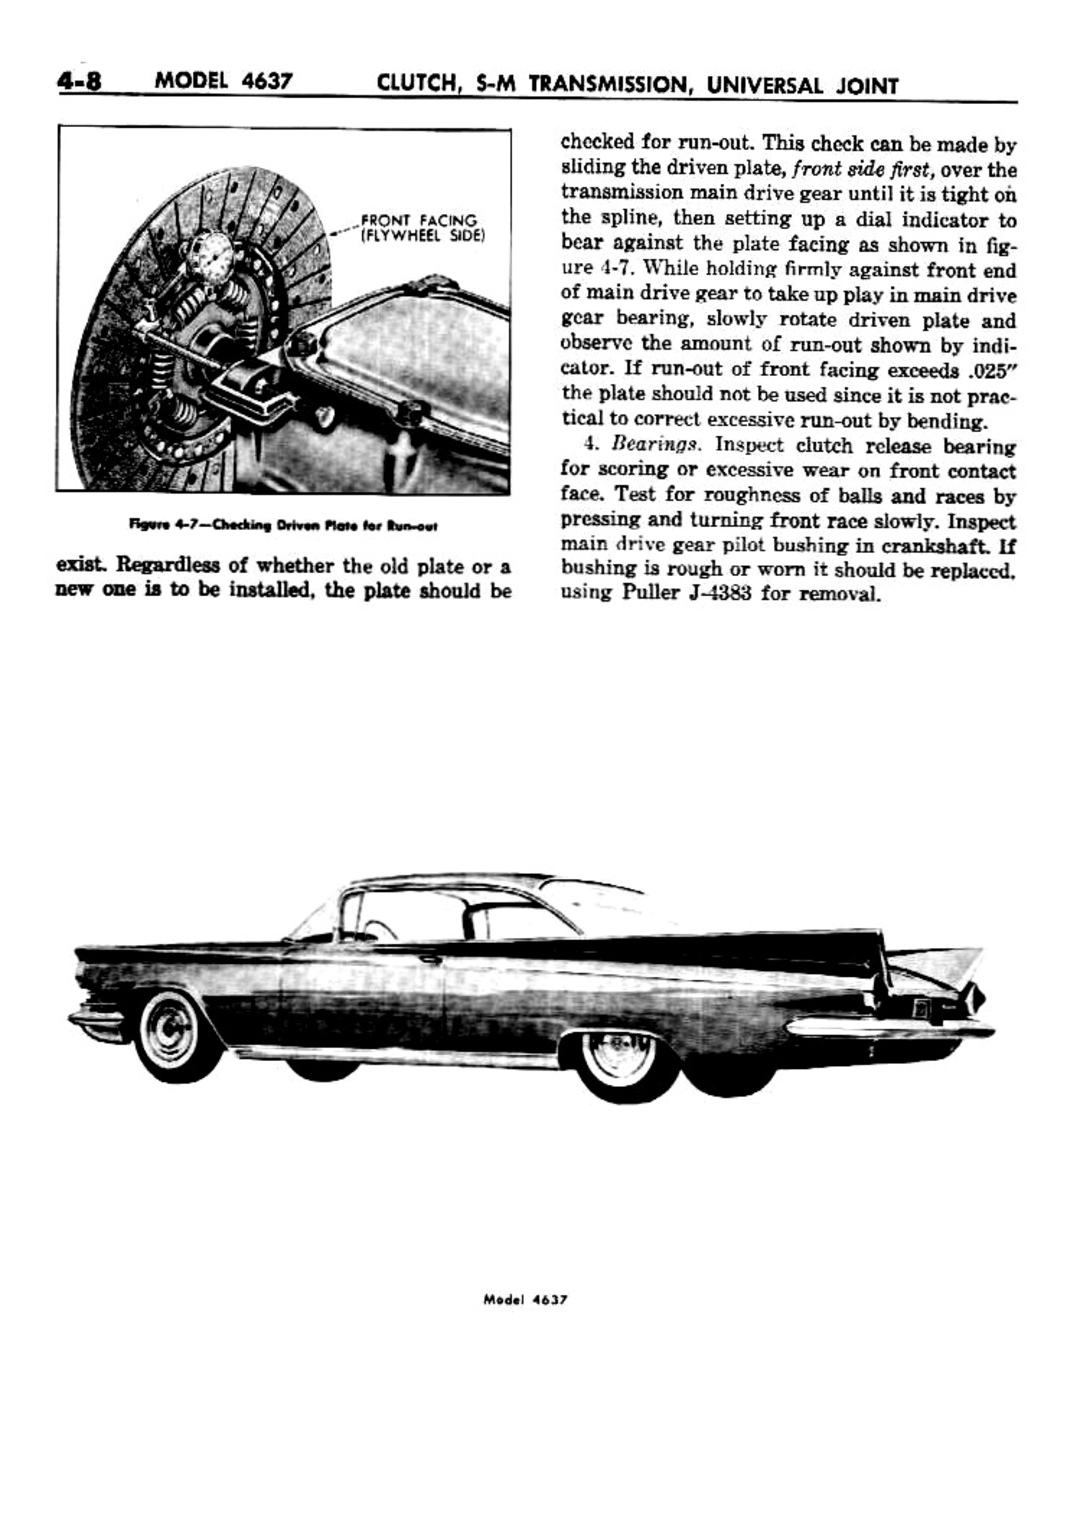 n_05 1959 Buick Shop Manual - Clutch & Man Trans-008-008.jpg